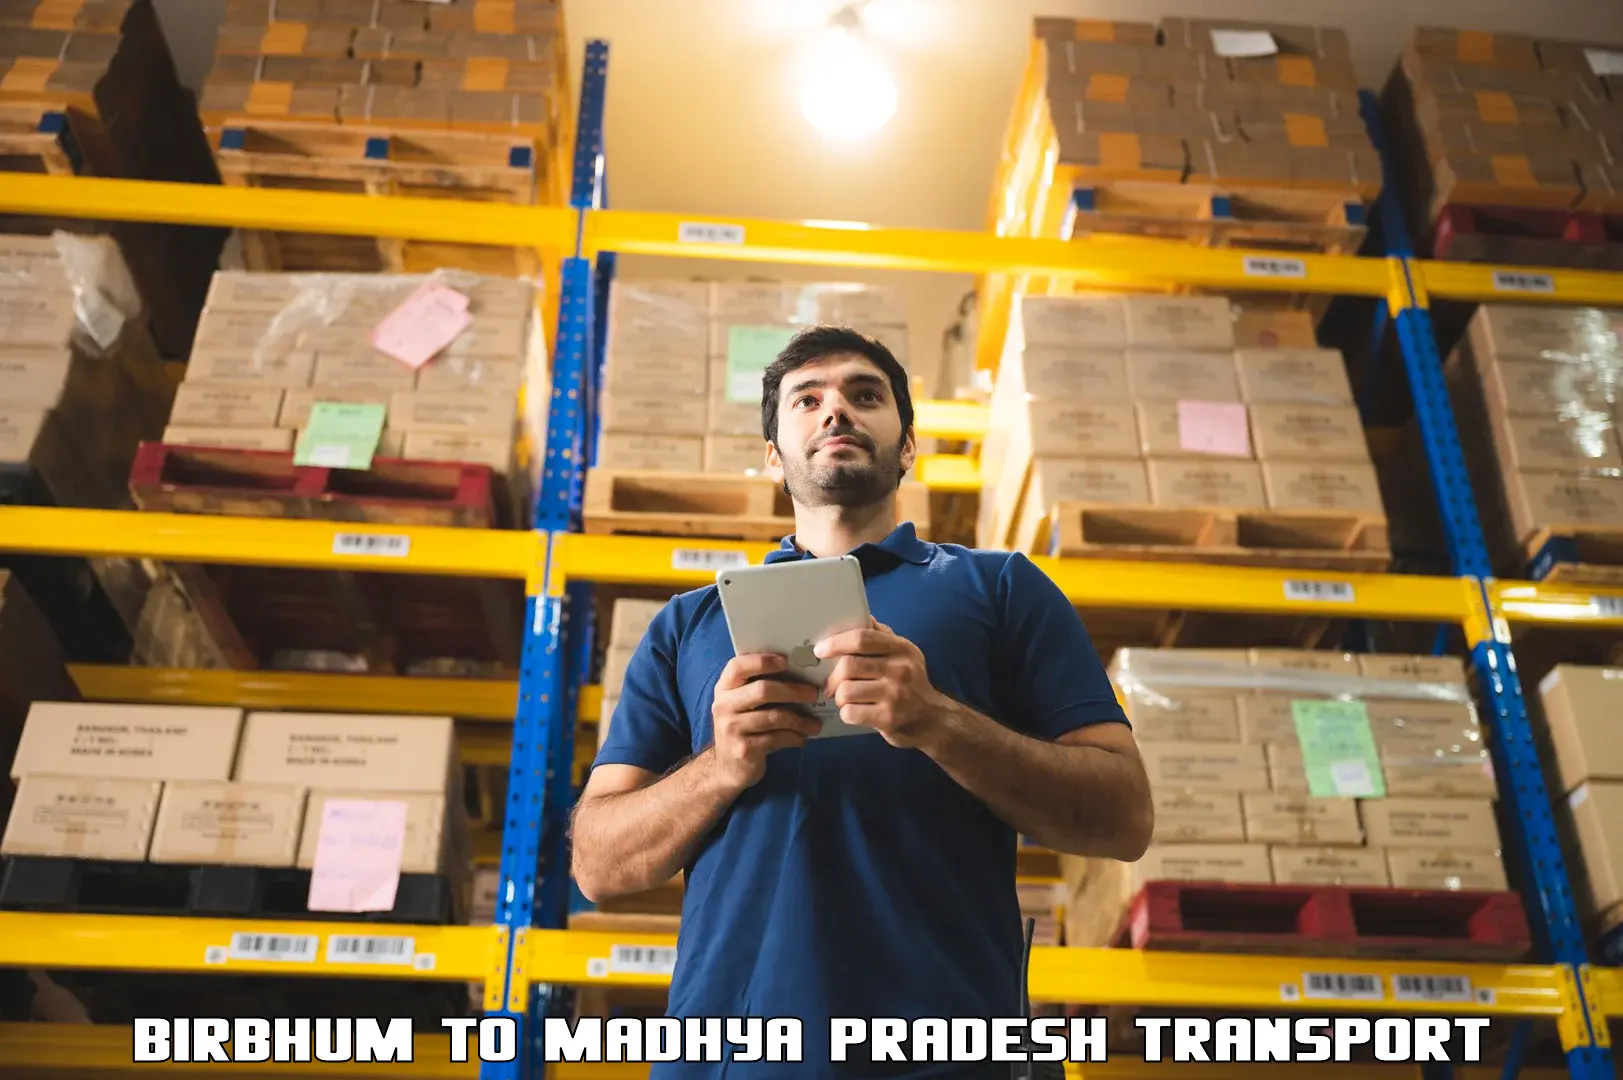 Goods delivery service Birbhum to Morar